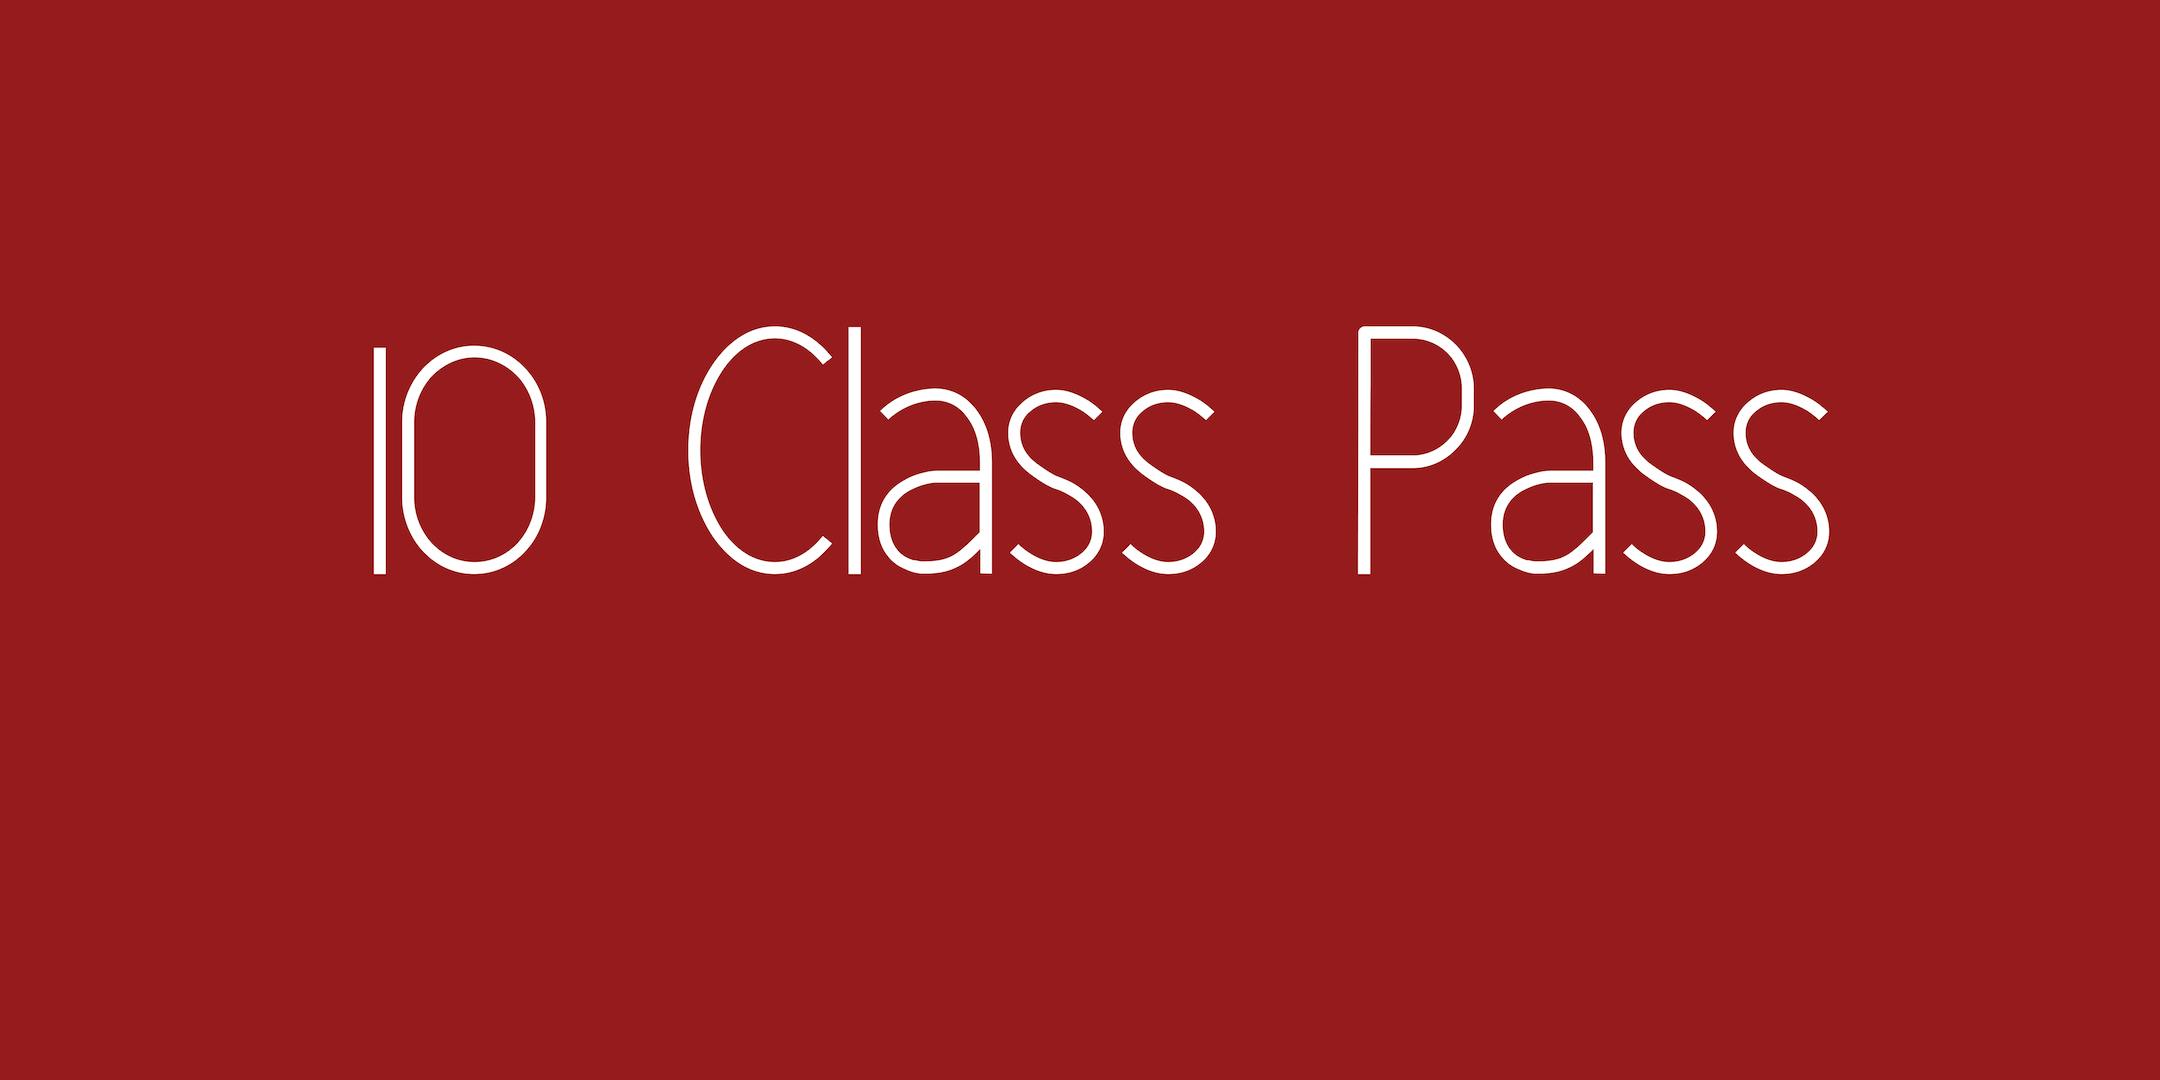 10 Class Pass - Yoga with Grace Tullamarine